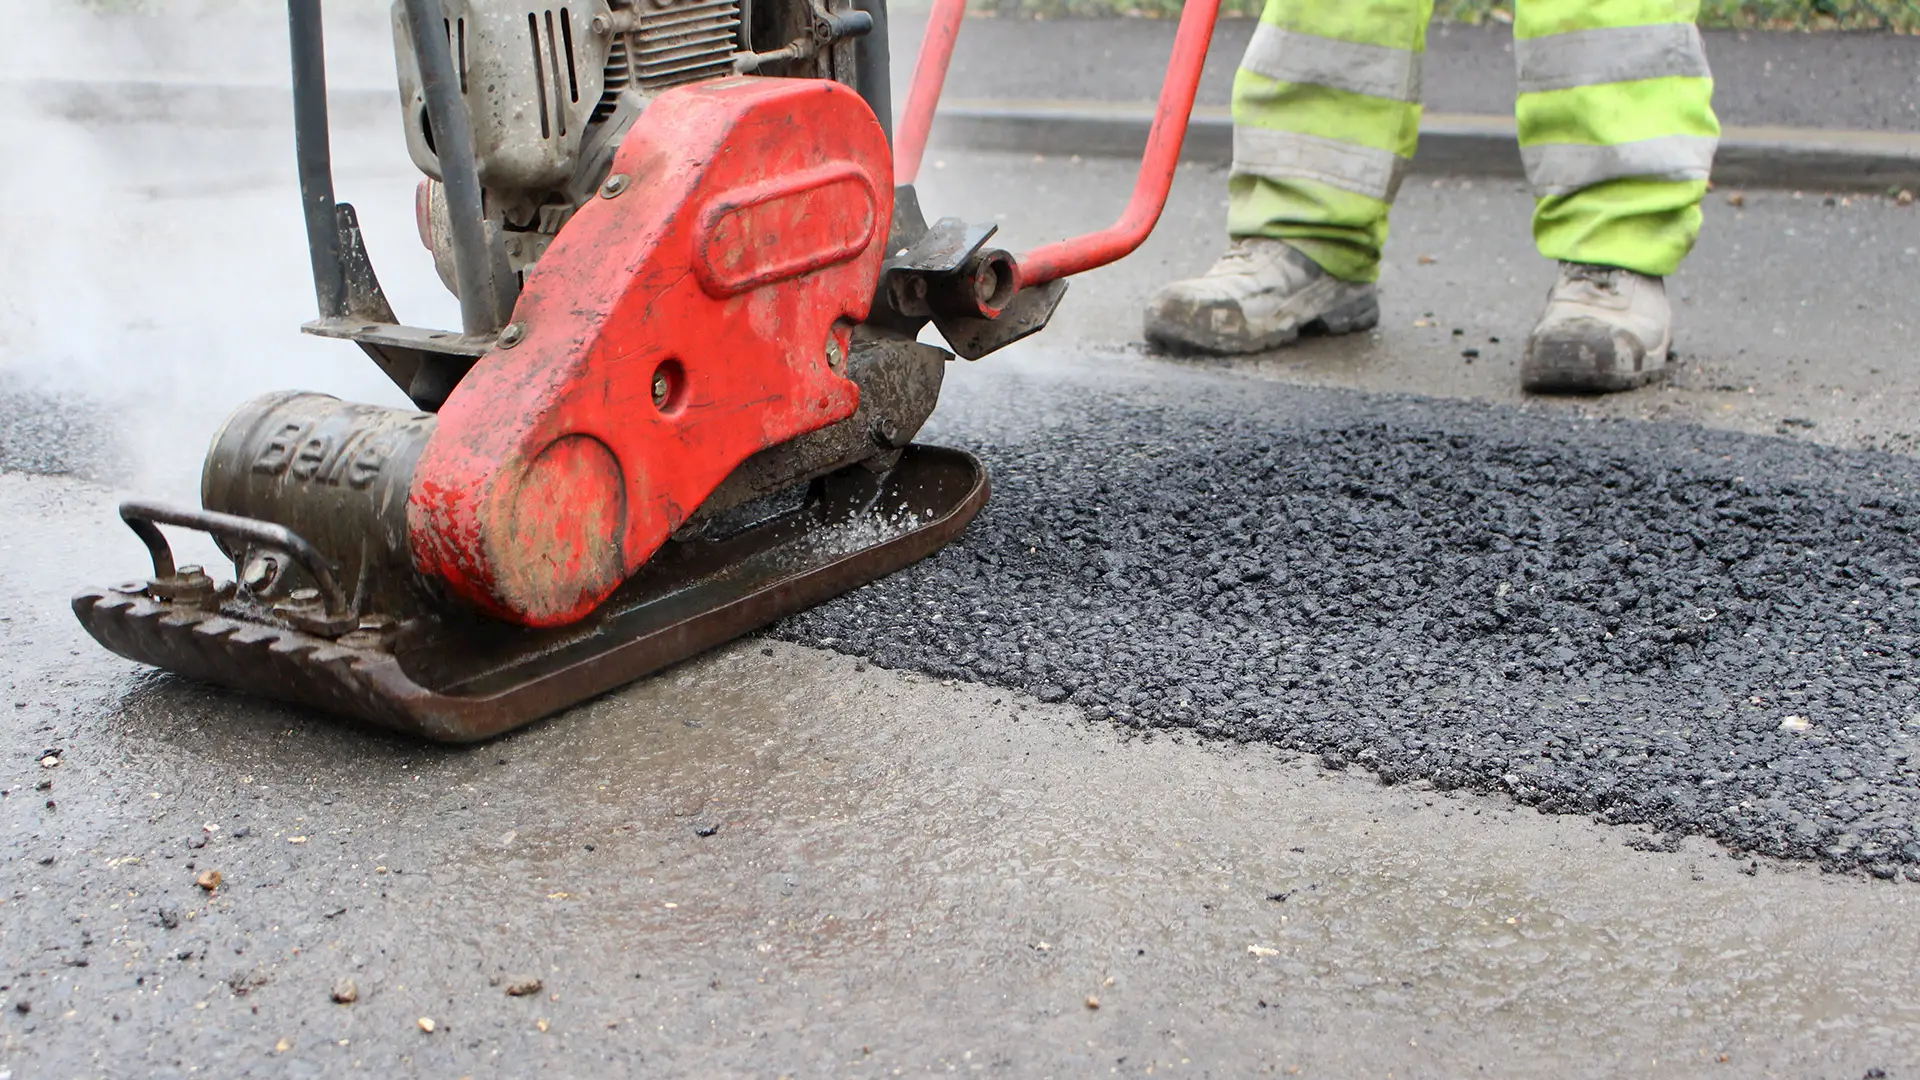 Experienced pothole repair contractors in Ilkeston